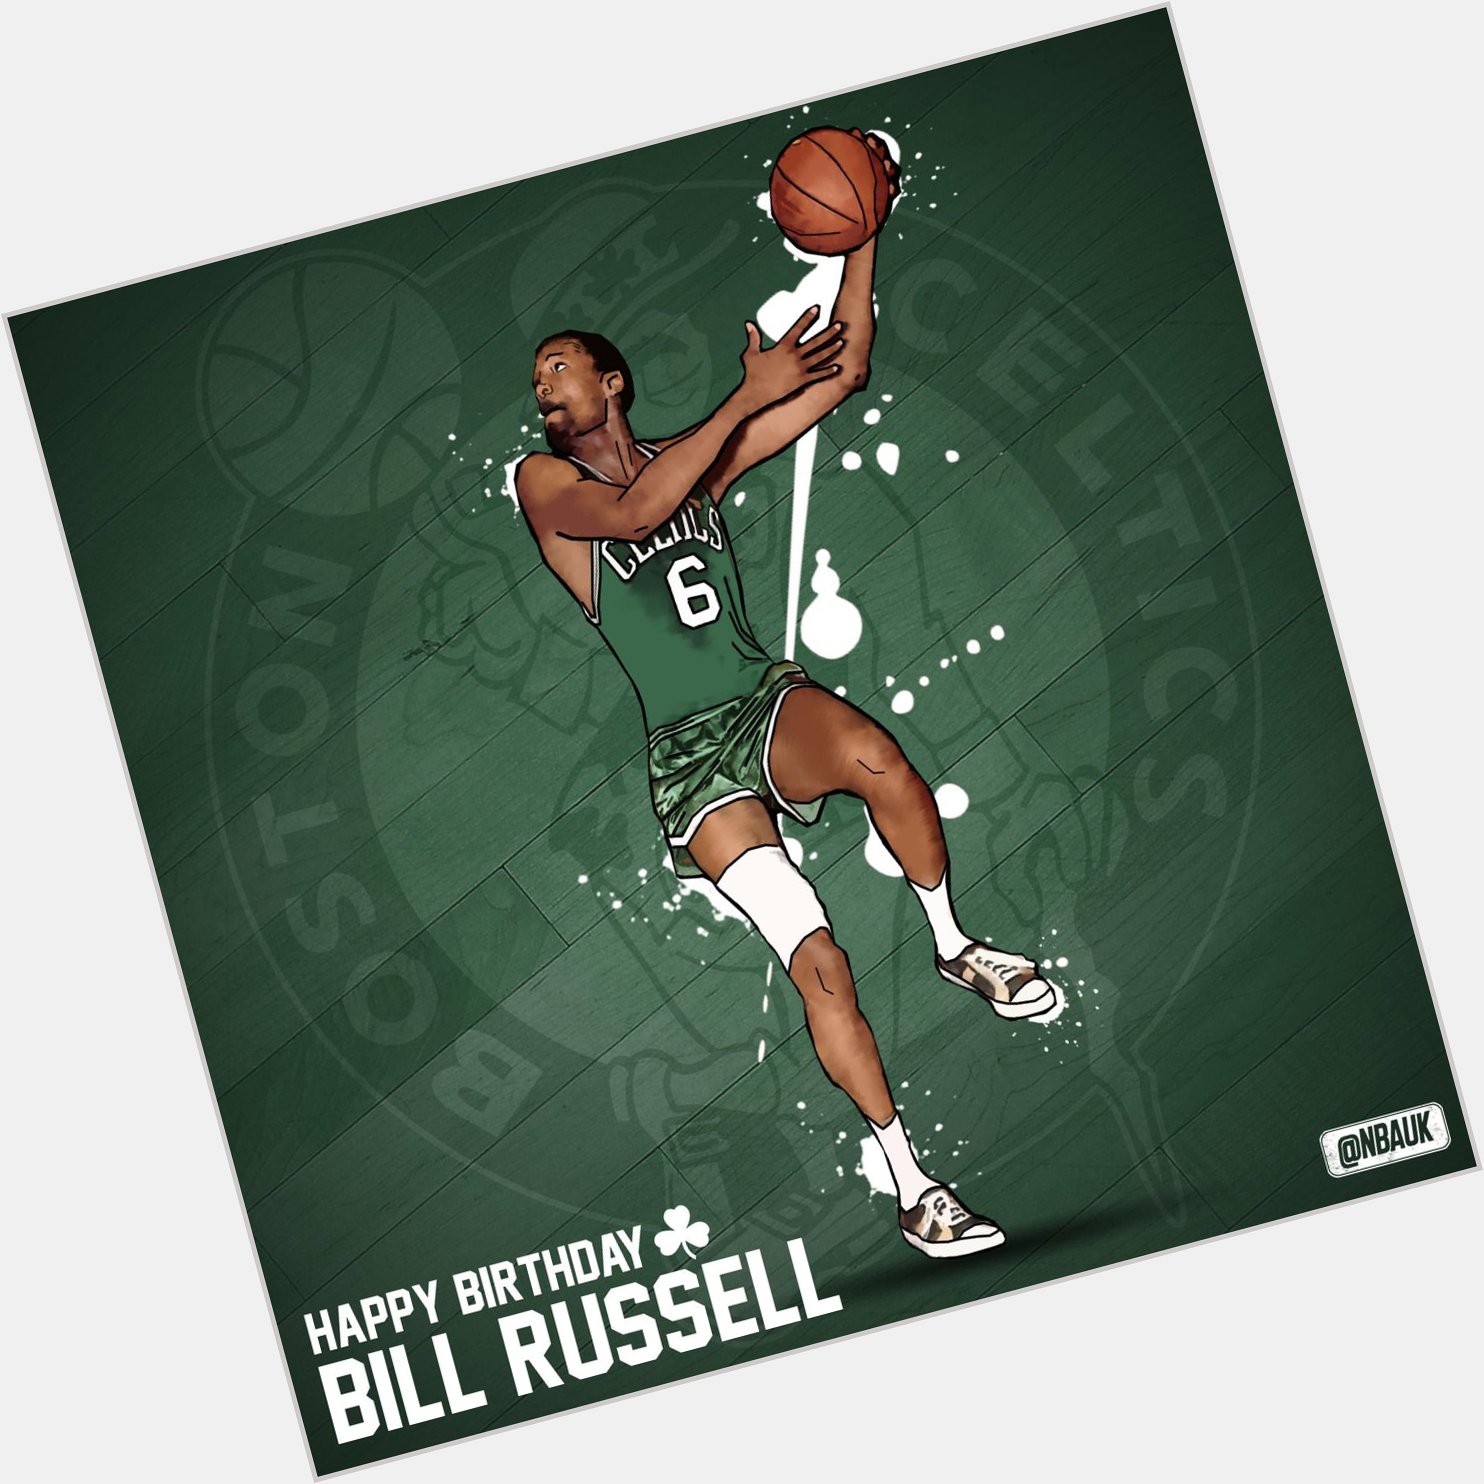 Happy birthday to 11 x NBA Champion, Bill Russell! 